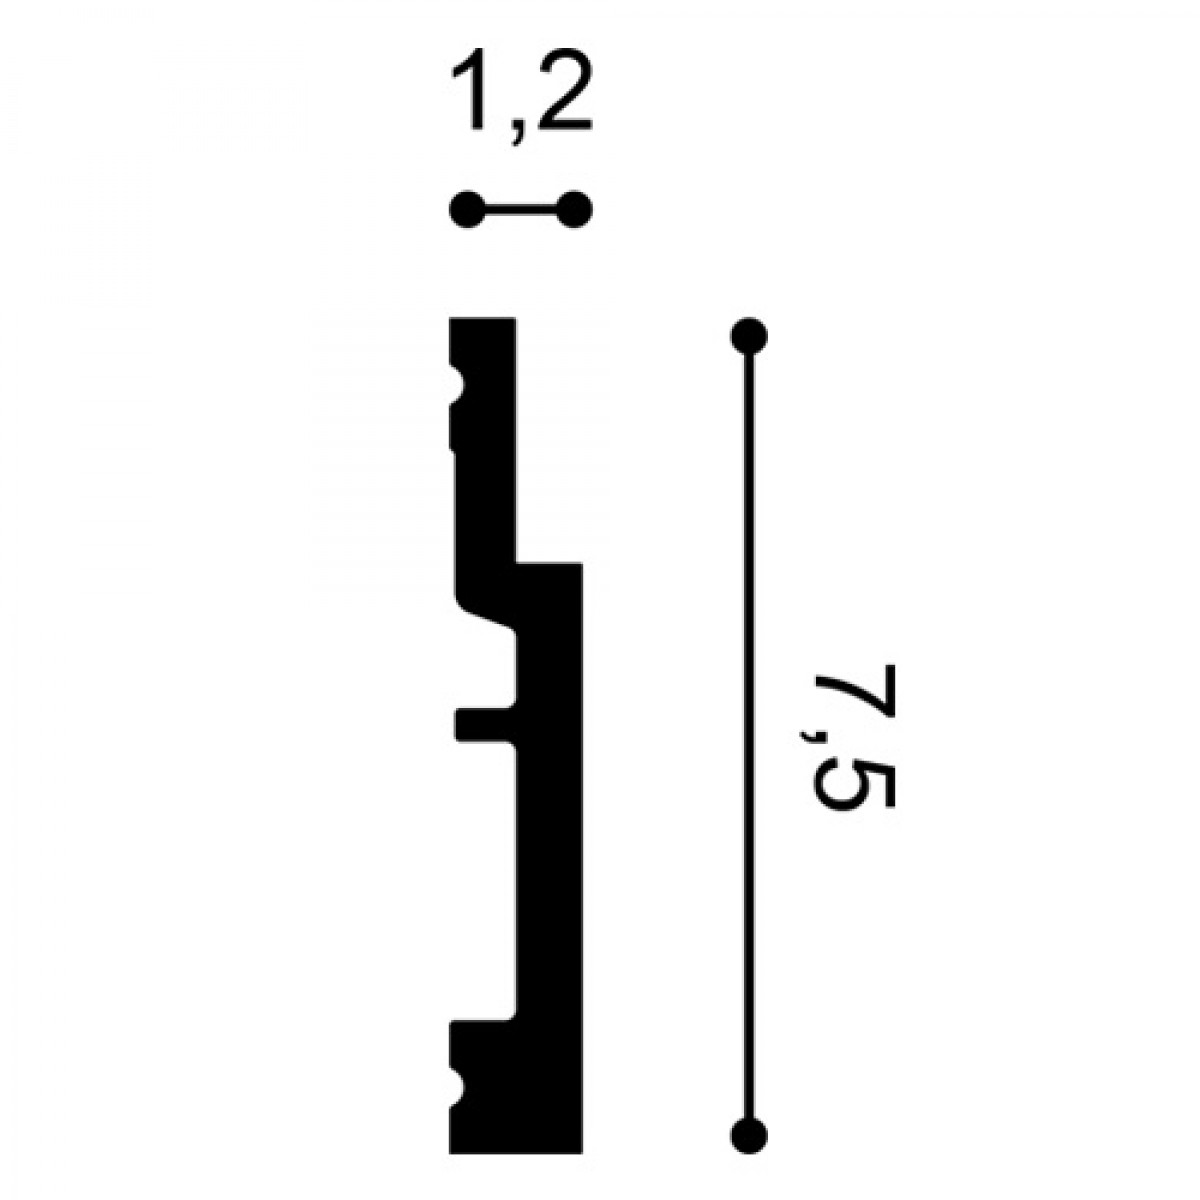 Plinta Modern SX187, Dimensiuni: 200 X 1.2 X 7.5 cm, Orac Decor, Plinte decorative 